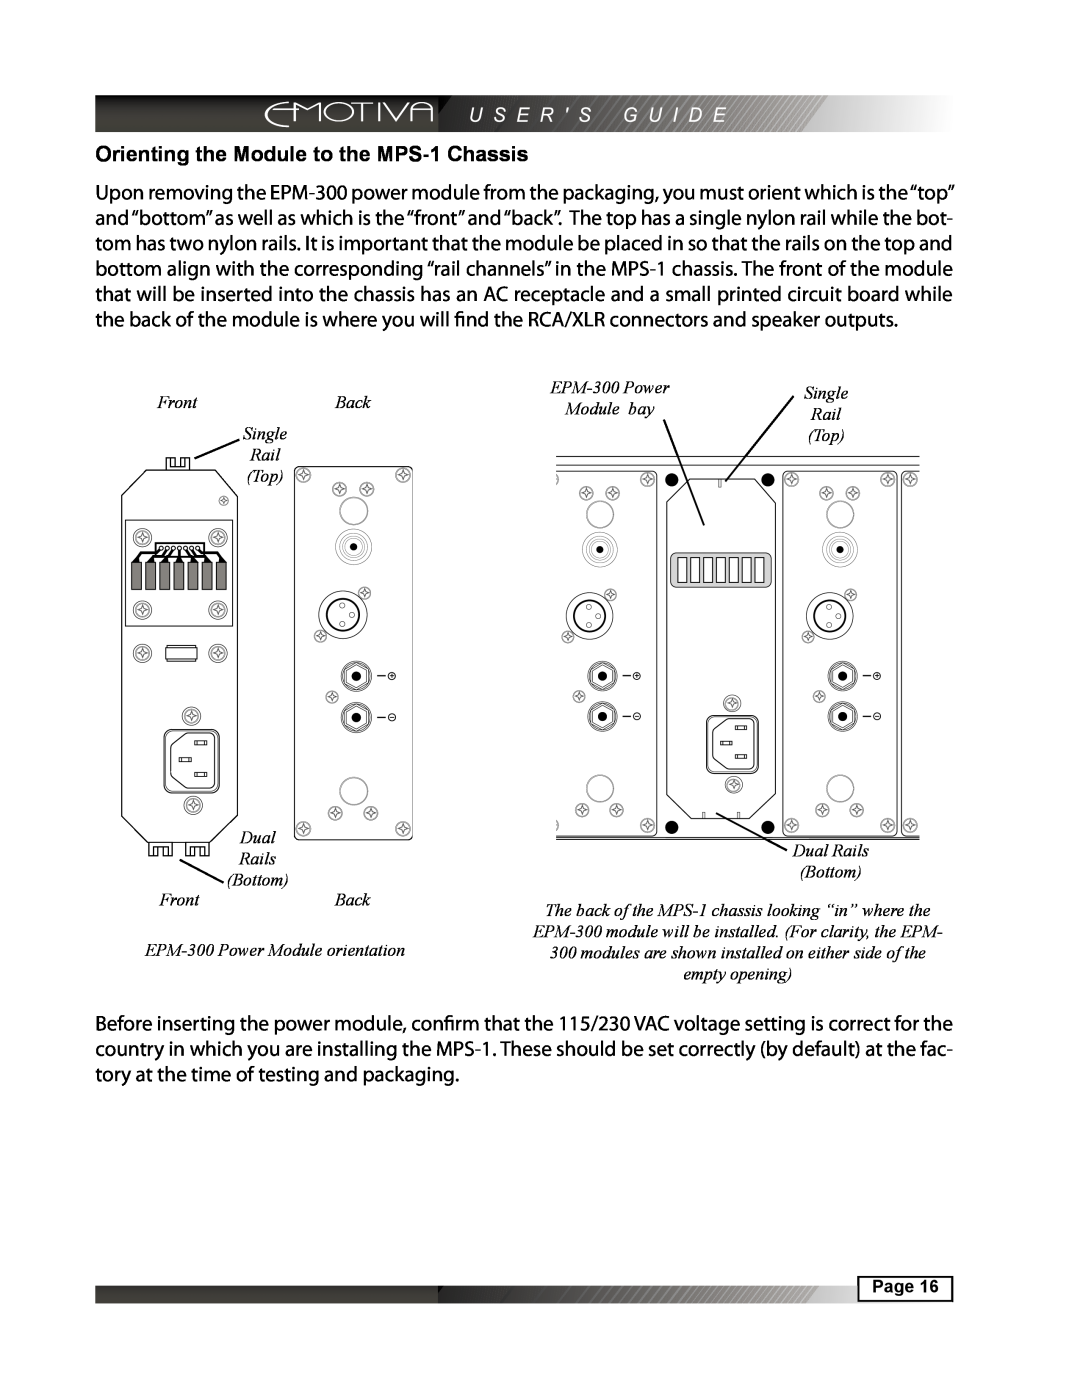 Emotiva MPS-1 manual FrontBack Single Rail Top Dual Rails Bottom, FrontBack EPM-300Power Module orientation, Module bay 